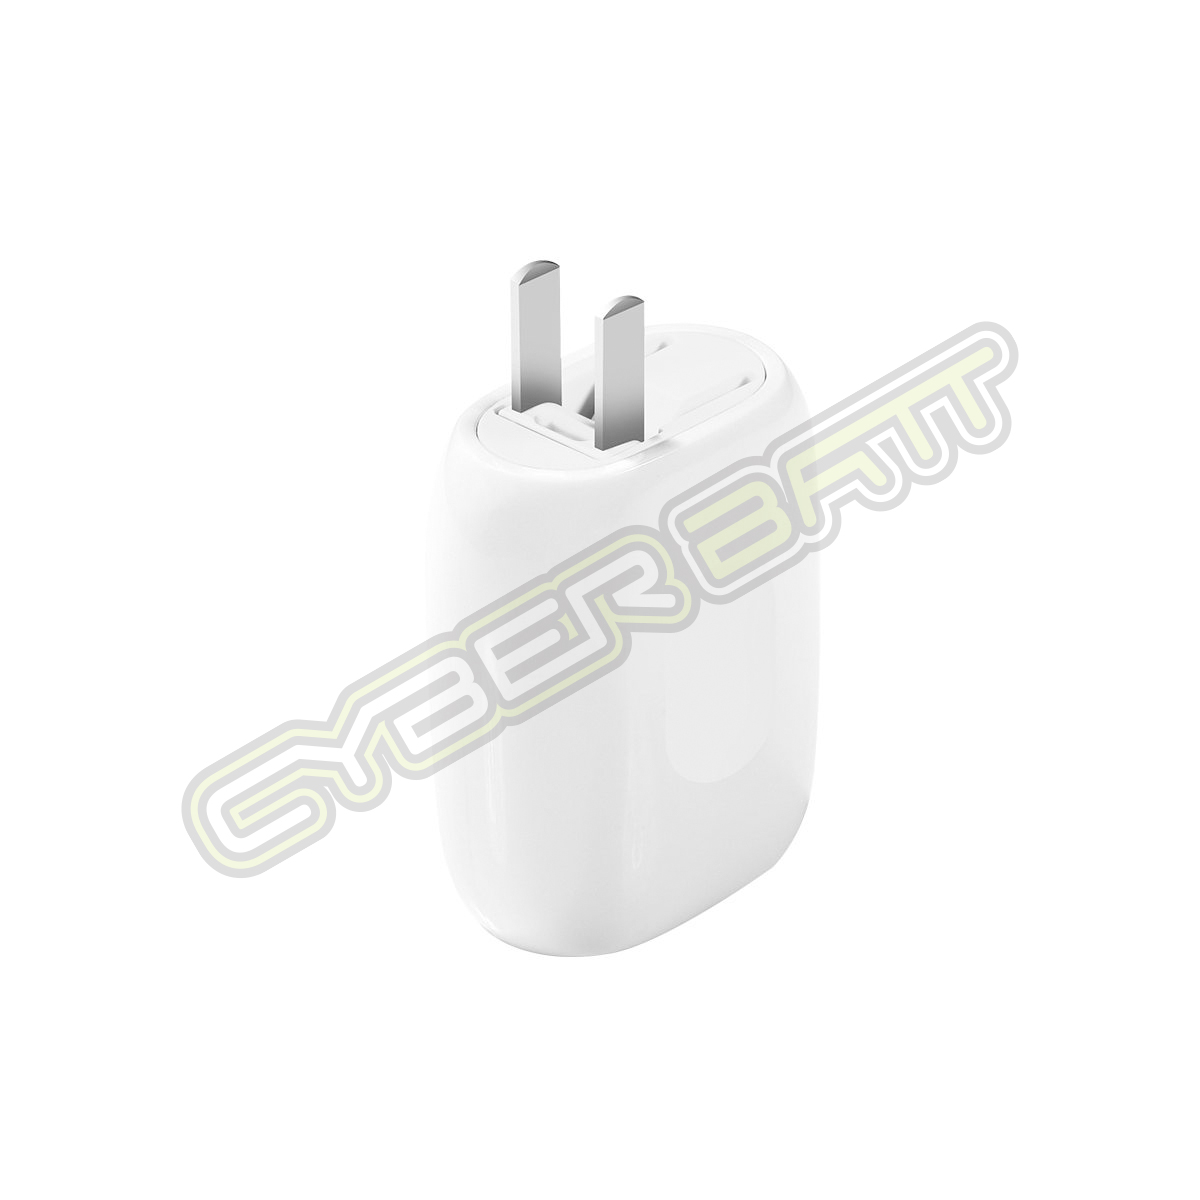 CHARGING L-M301 Portable 5V/3.1A 3-USB Port Smart Quick Charge for Smartphones & Tablets & Power Bank Joyroom (White)